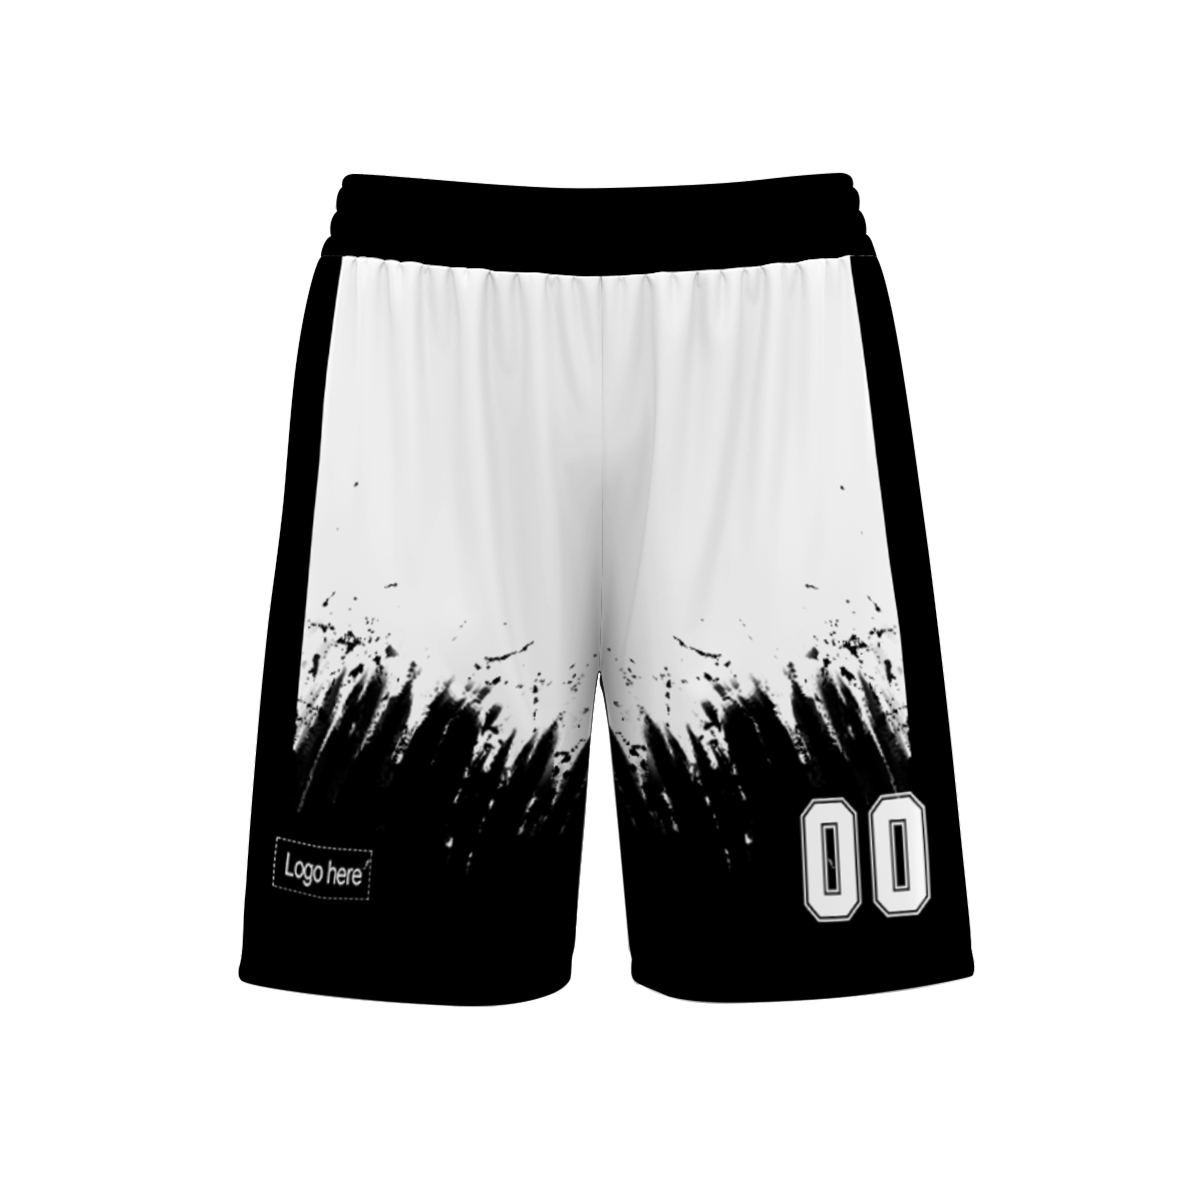 wholesale-custom-basketball-jerseys-design-blank-polyester-sublimation-quick-dry-basketball-jerseys-for-men-women-at-cj-pod-7